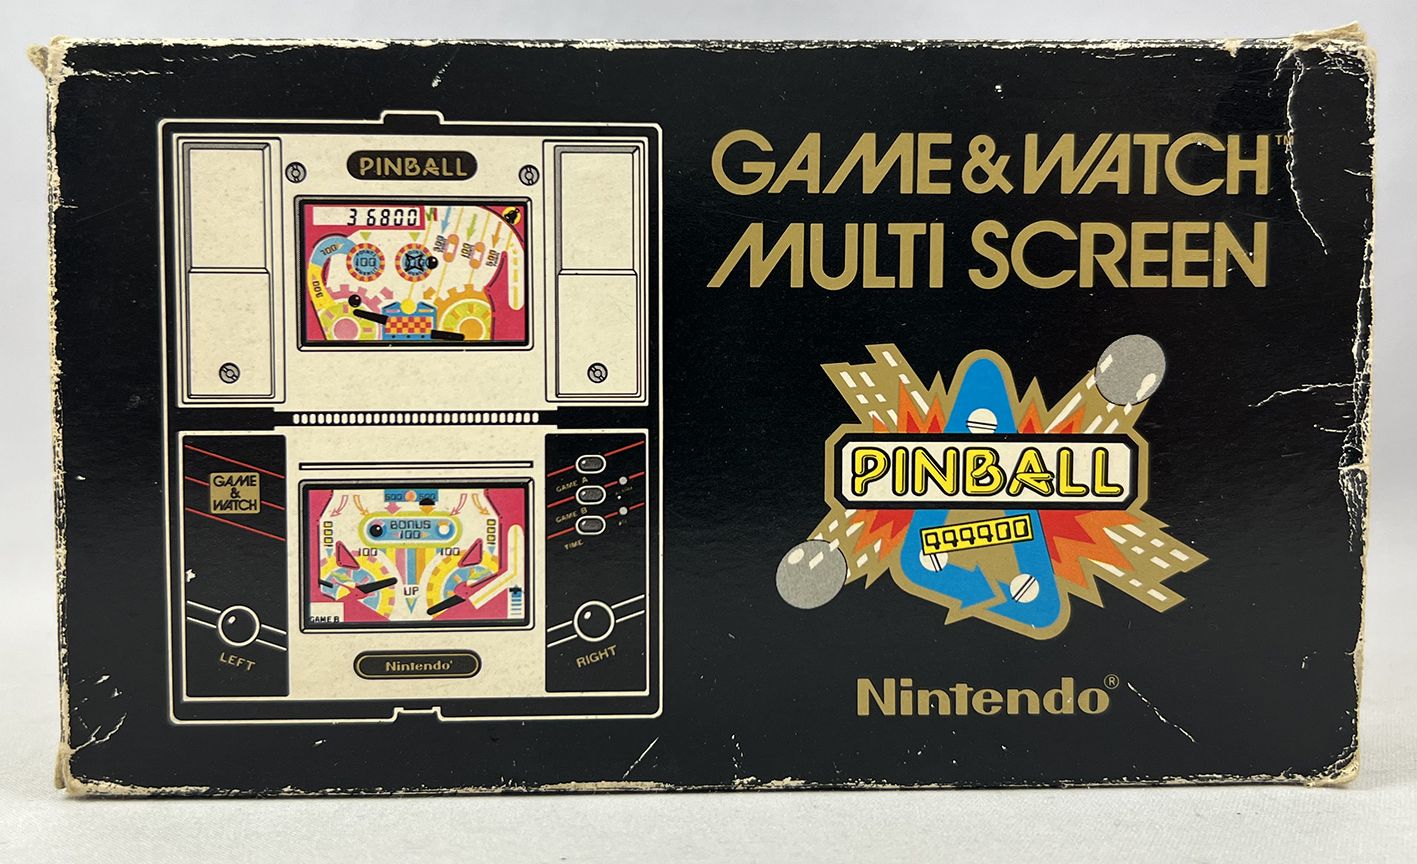 Multi-game box